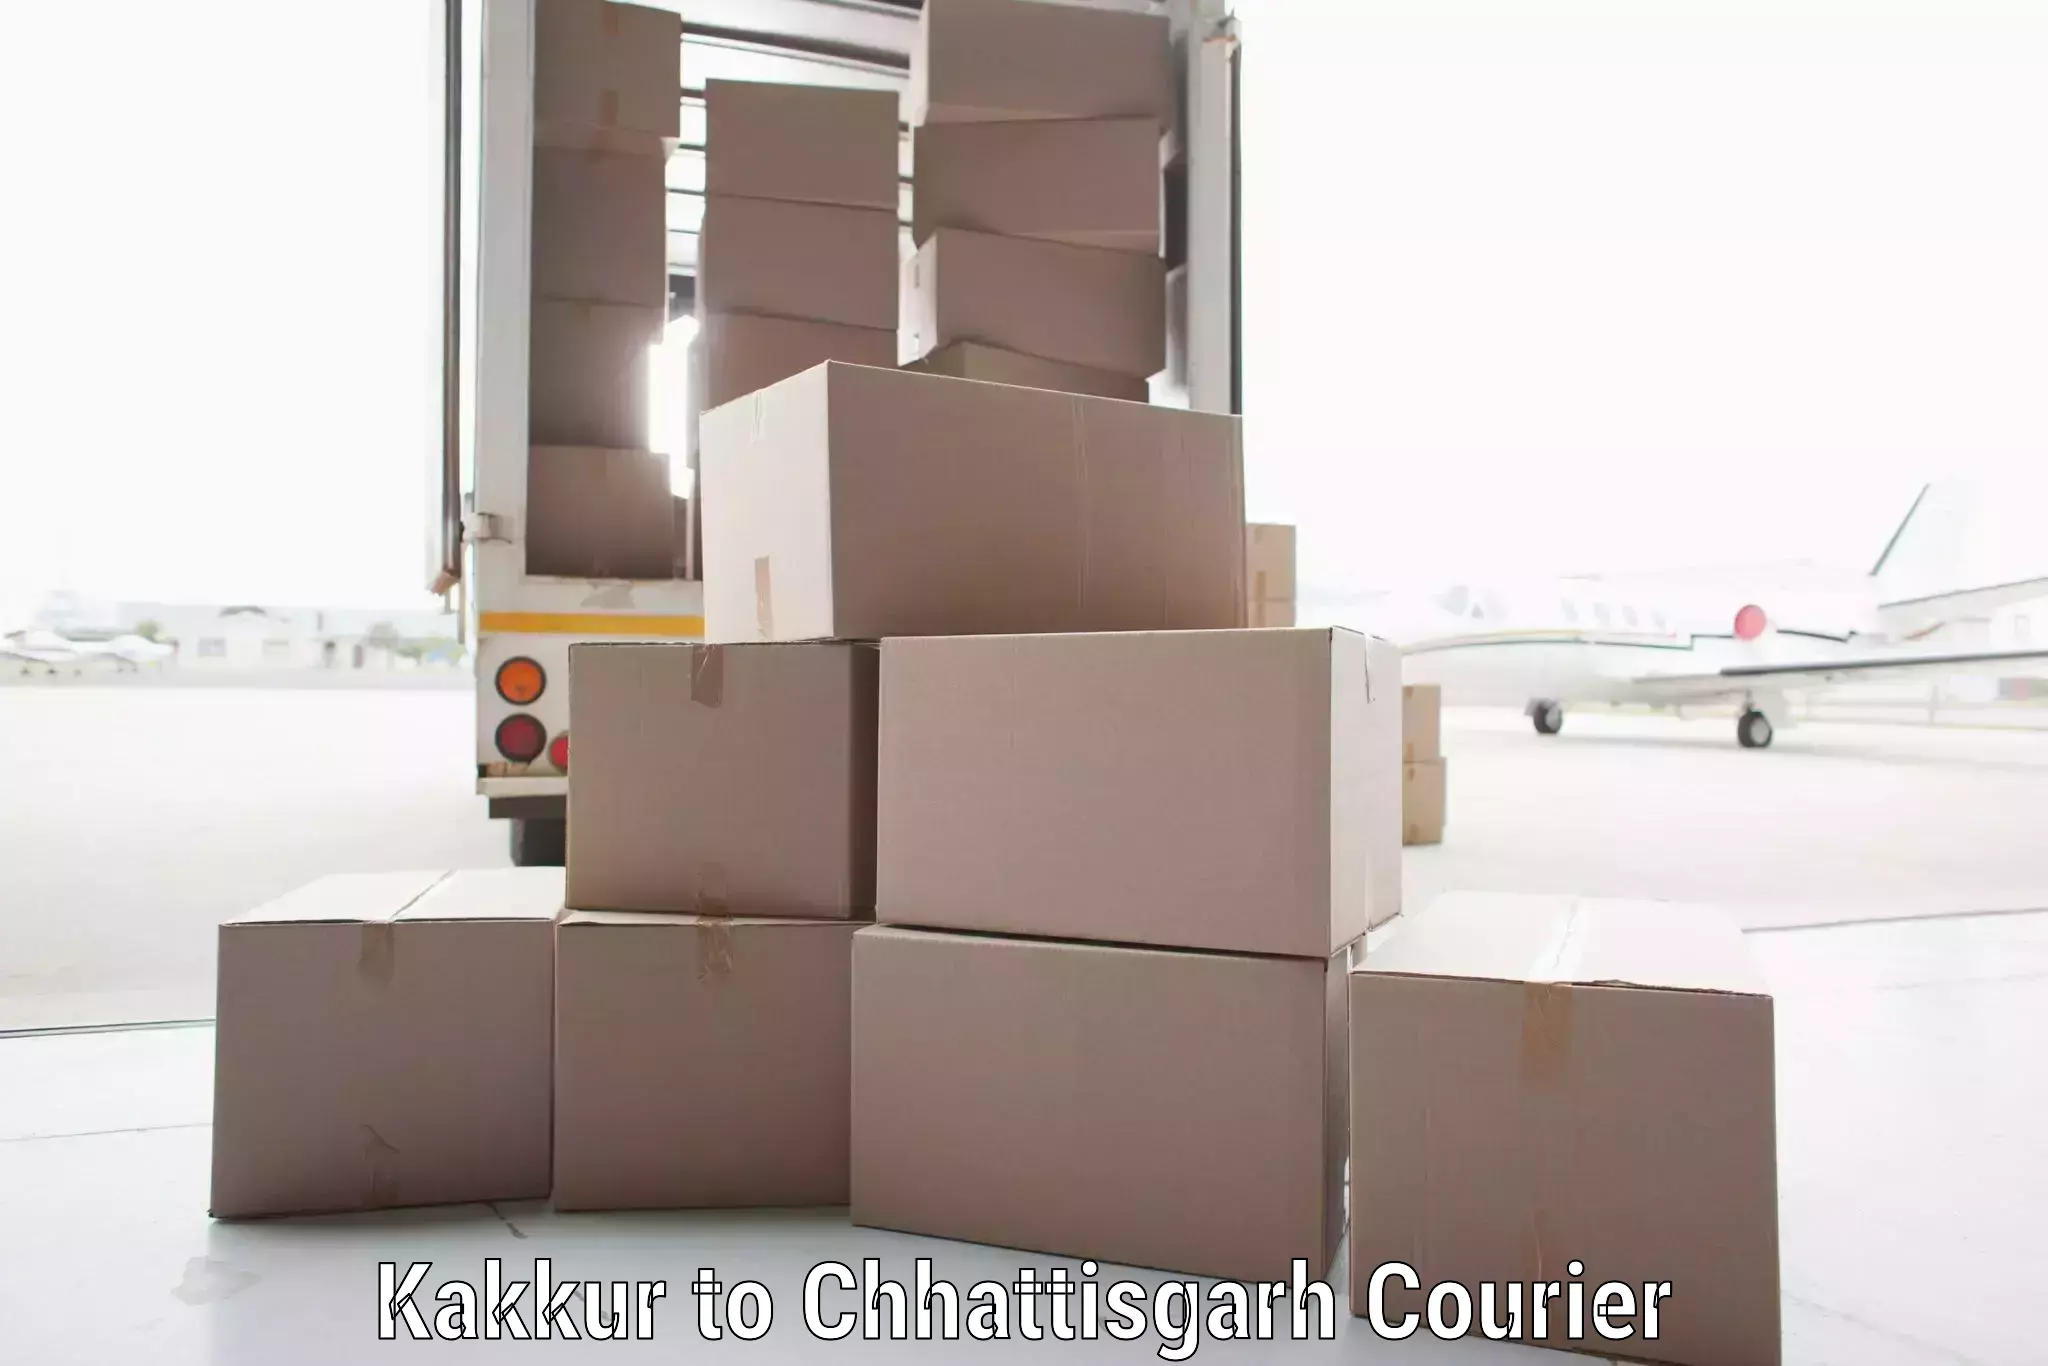 Professional parcel services Kakkur to Raipur